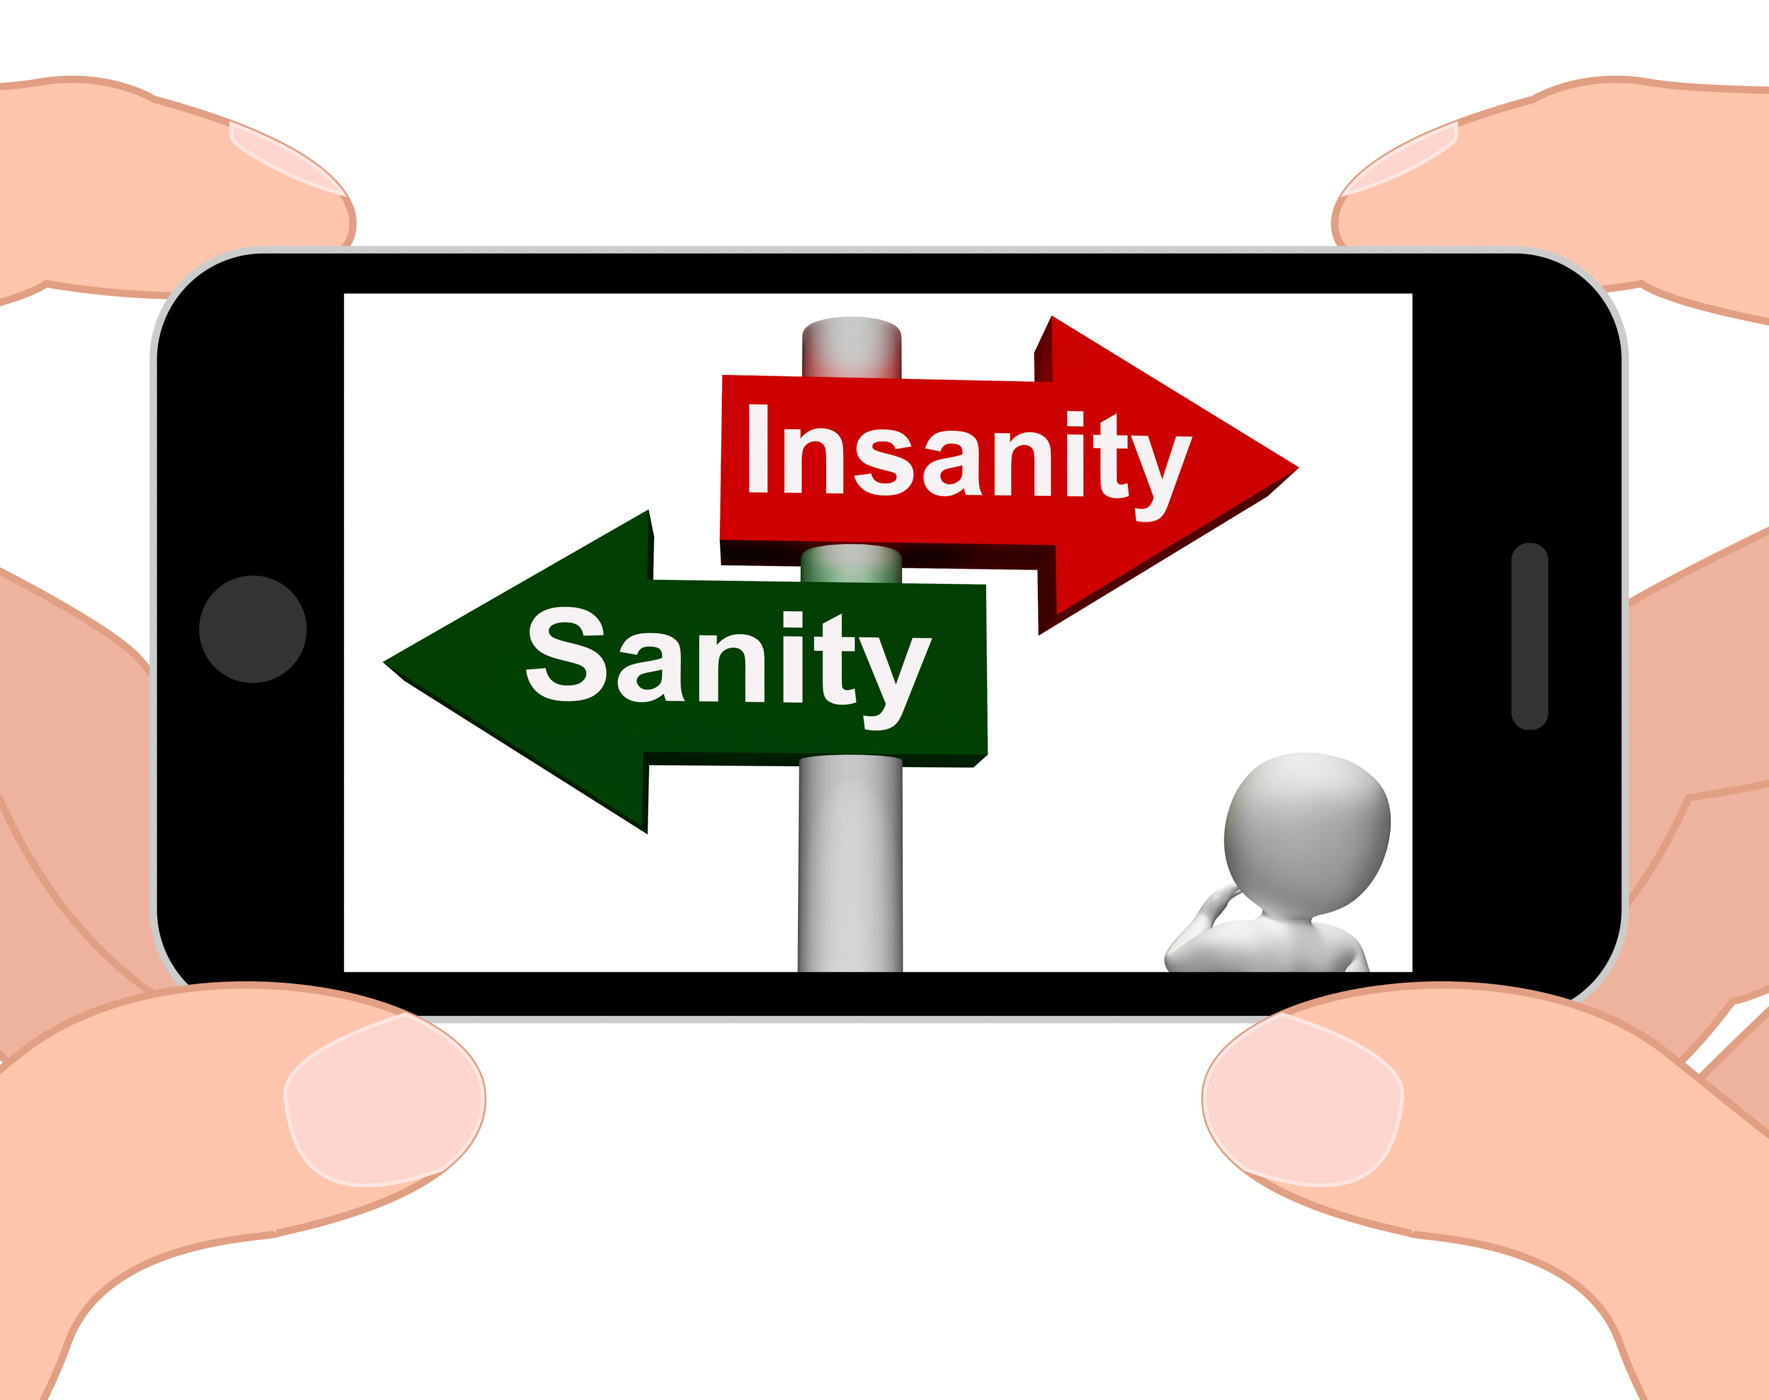 Insanity sanity signpost displays sane or insane photo